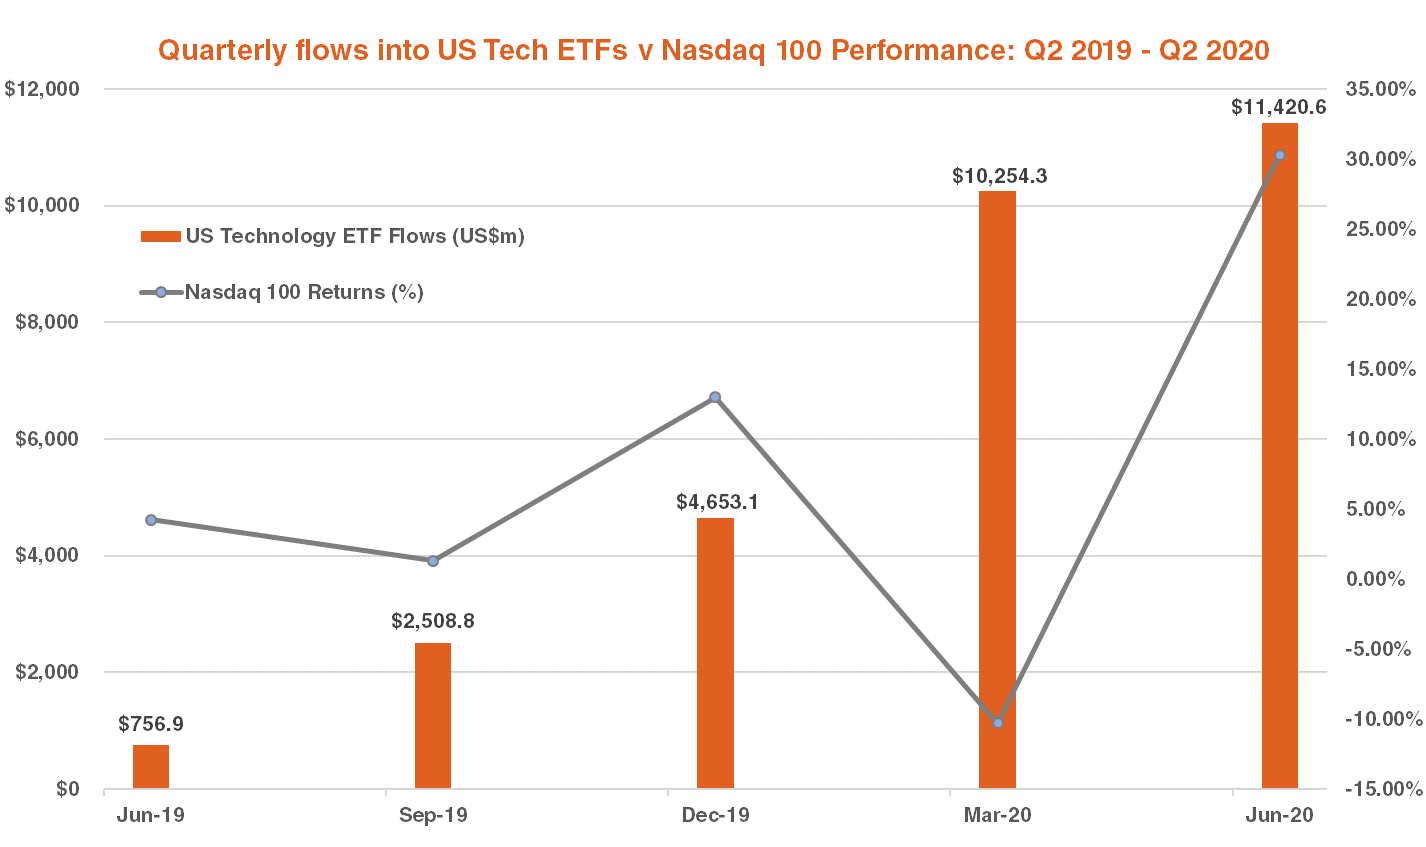 Quarterly flows into US tech ETFs vs Nasdaq 100 performance Q2 2020